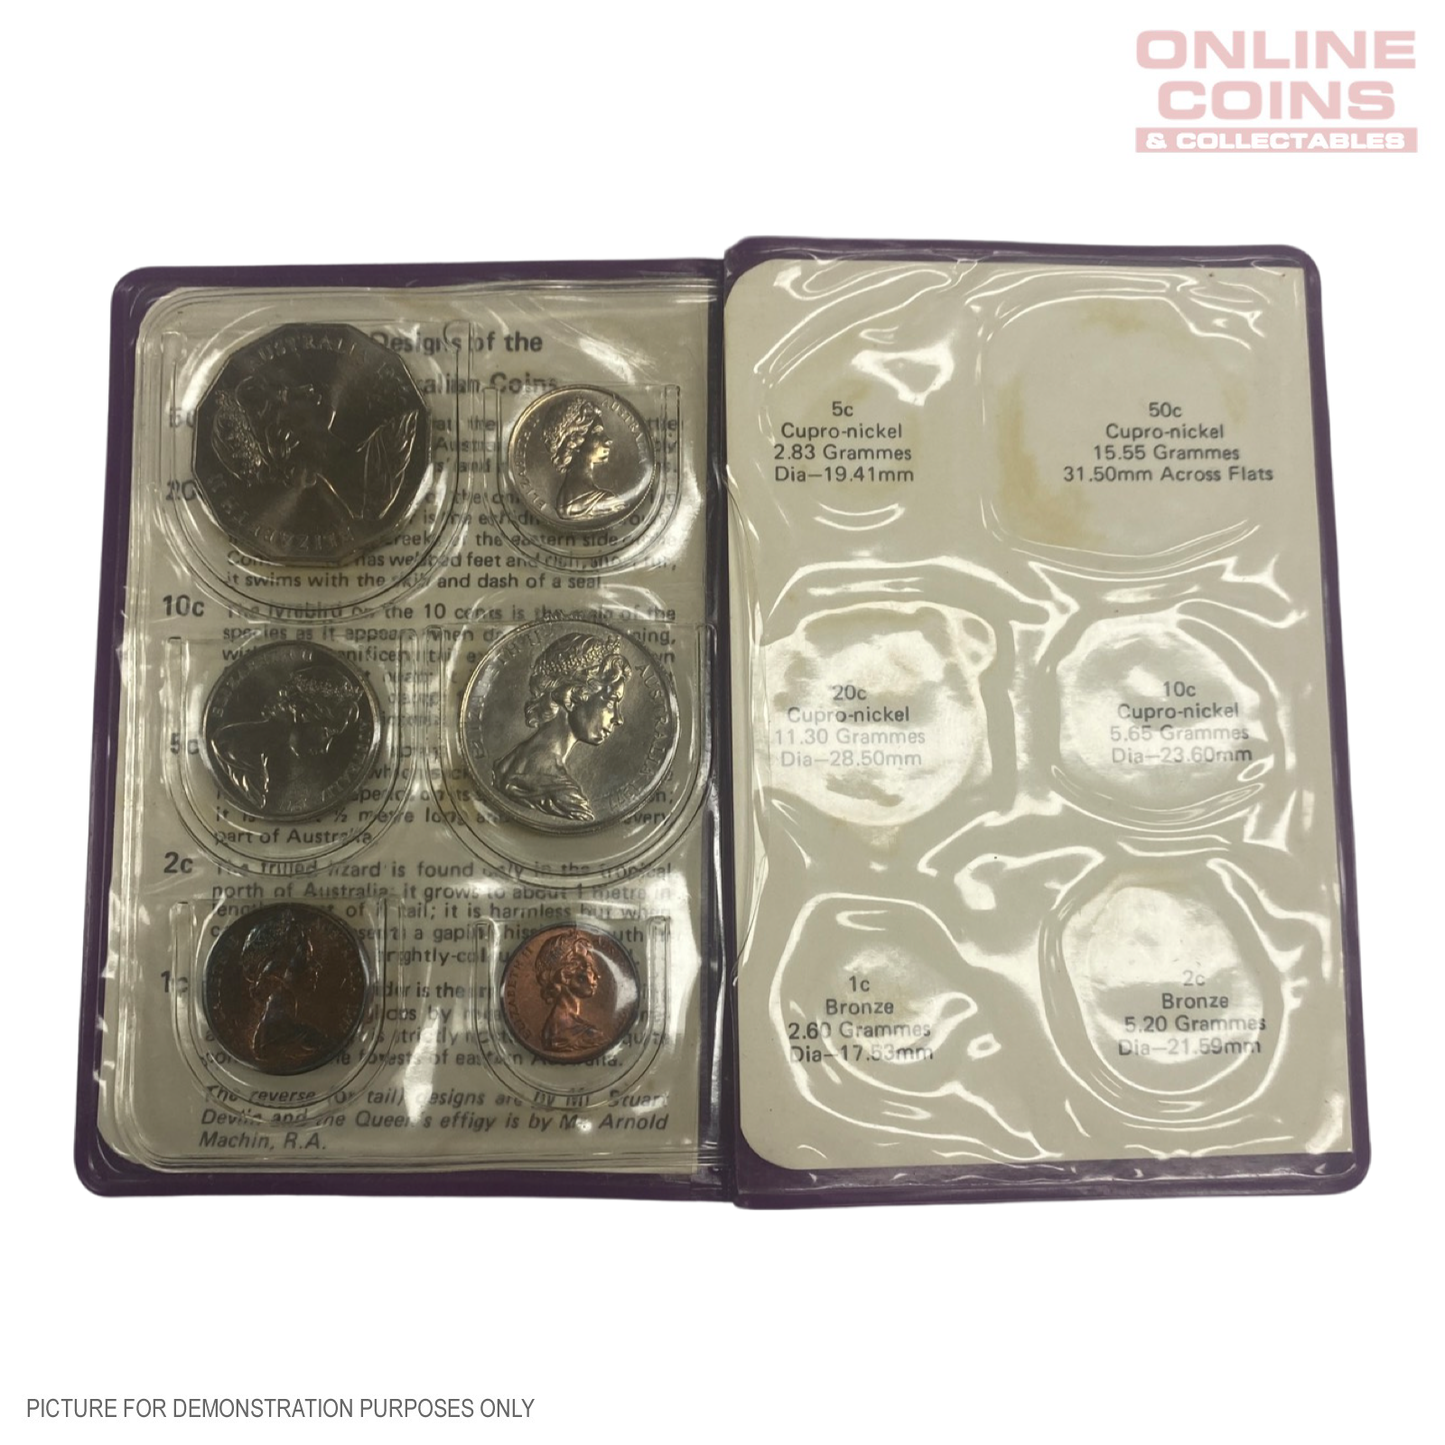 1977 Uncirculated Coin Year Set in Royal Purple Folder - Silver Jubilee